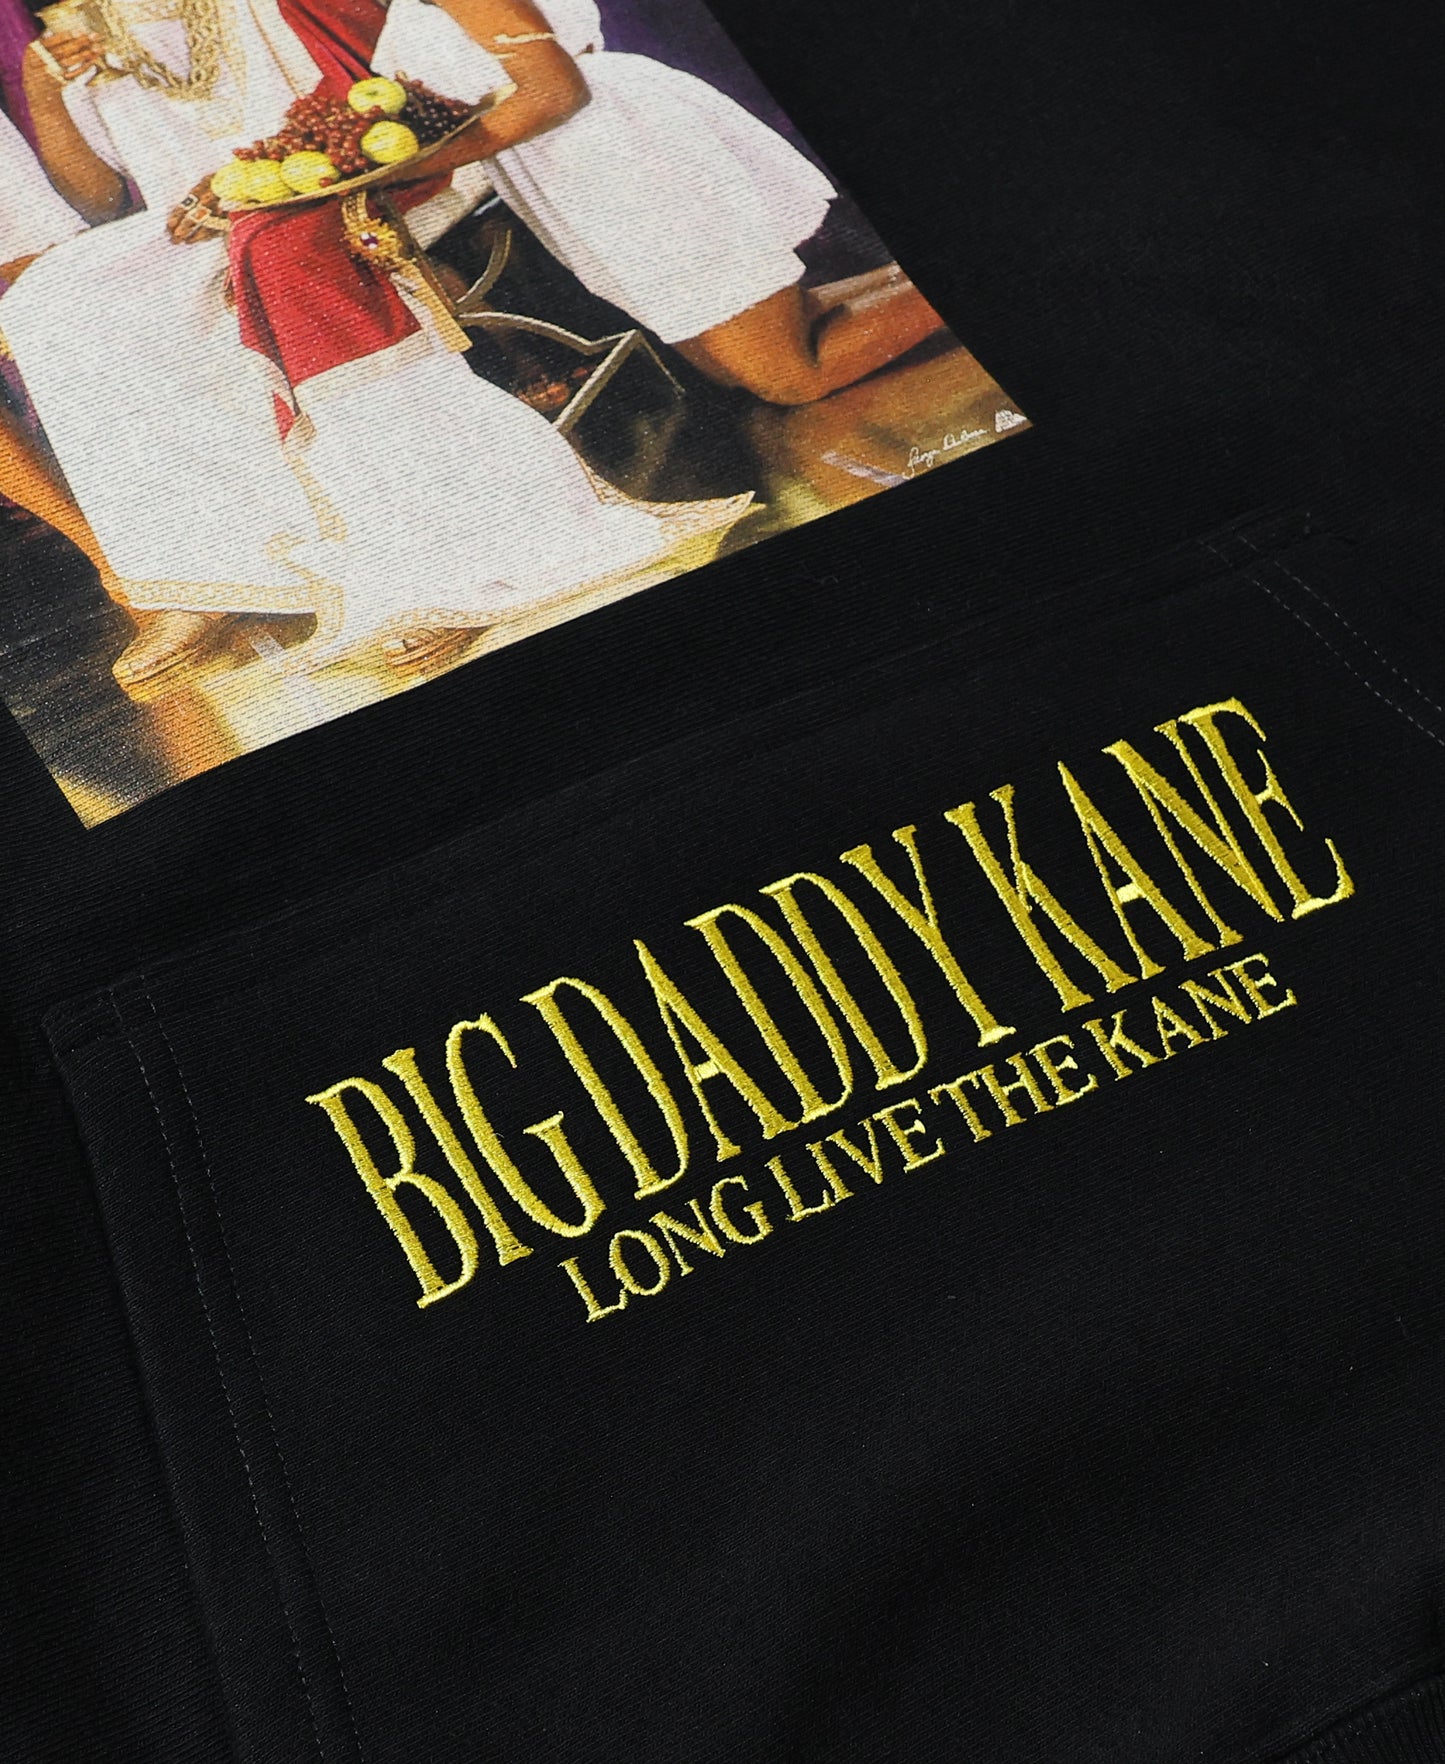 [BIG DADDY KANE] “Long Live The Kane” HOODIE